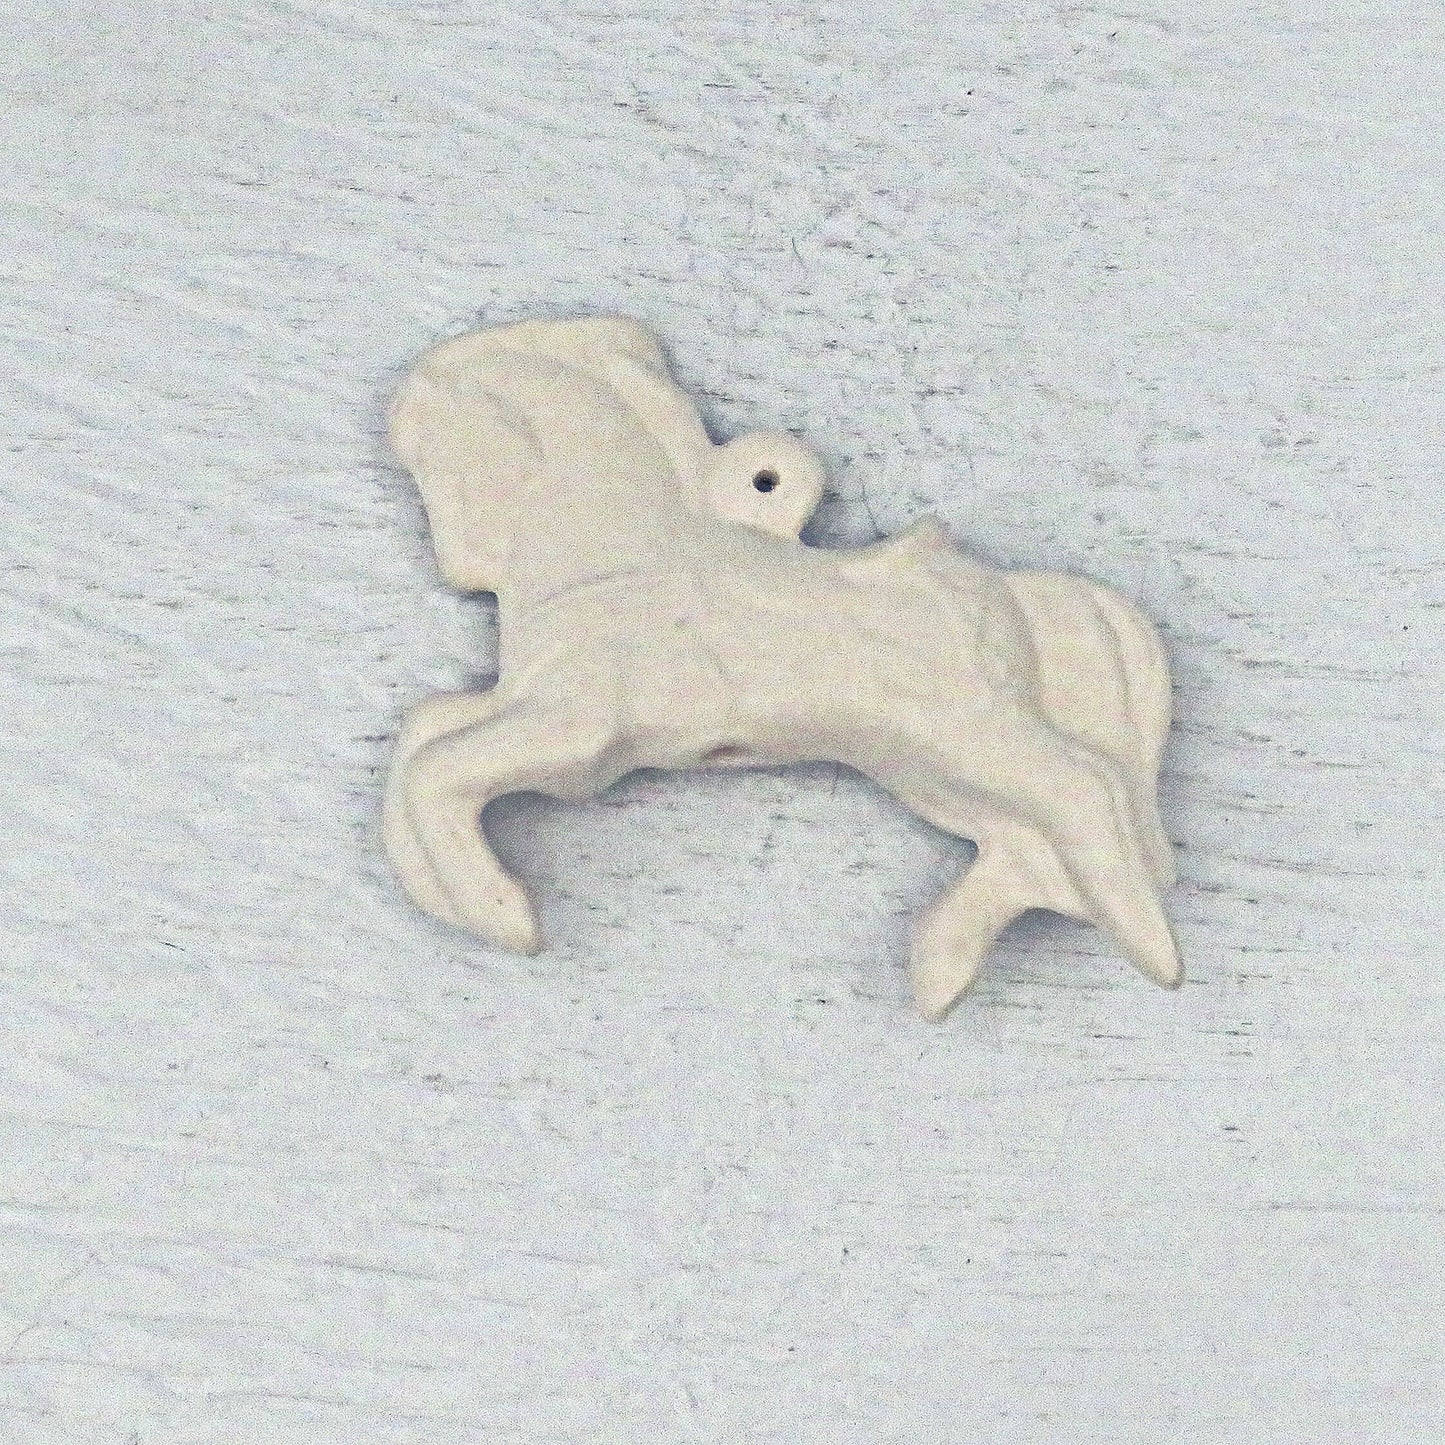 Handmade Unpainted Ceramic Galloping Carousel Horse